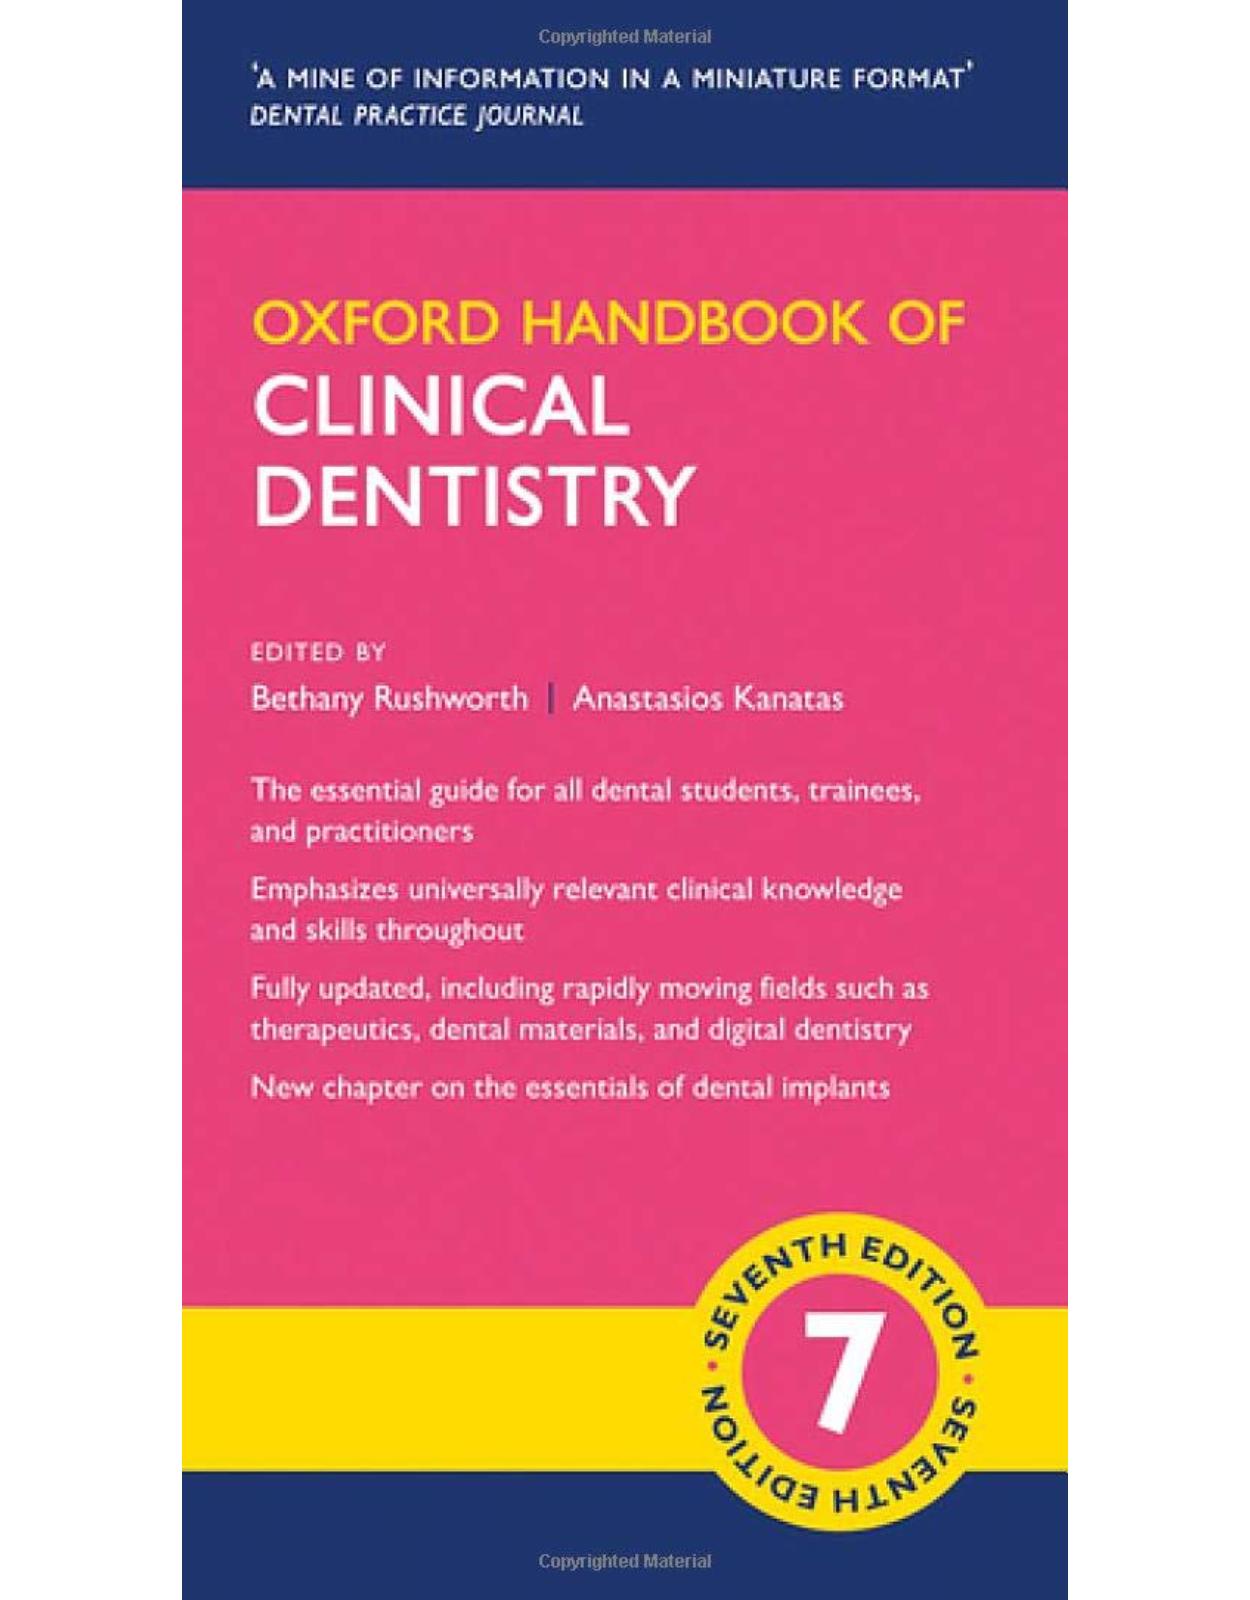 Oxford Handbook of Clinical Dentistry (Oxford Medical Handbooks)